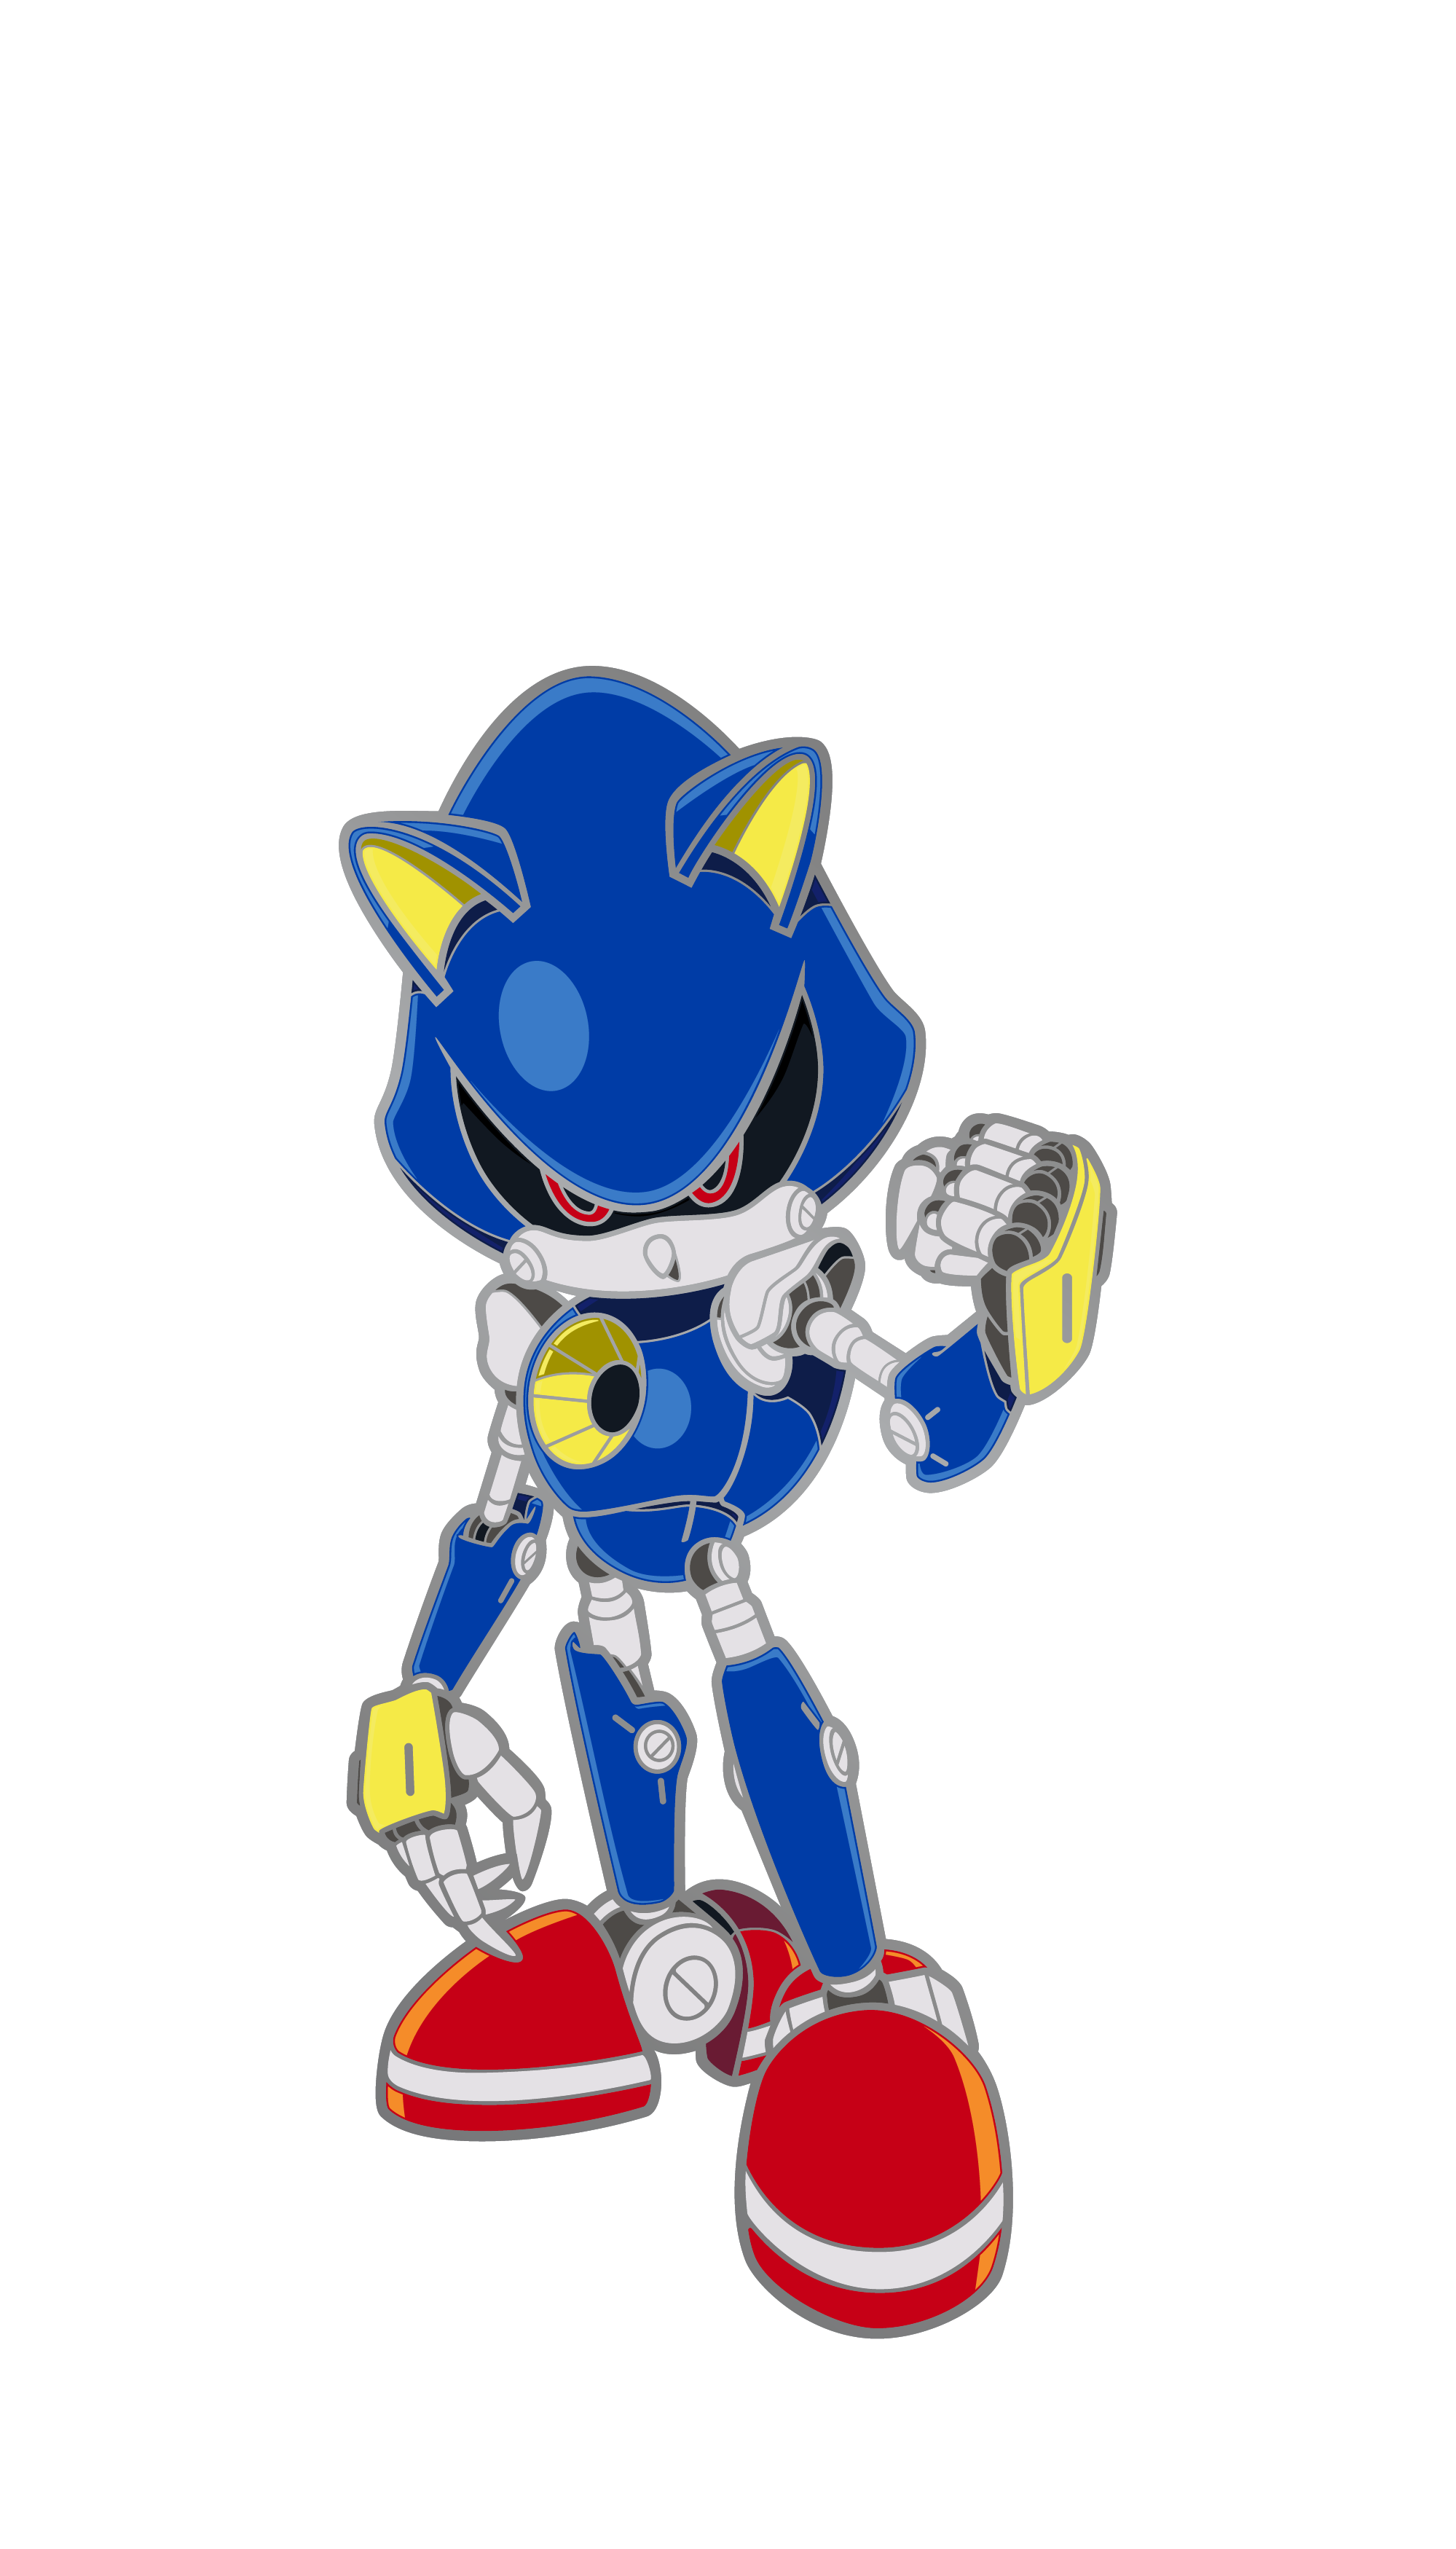 Metal Sonic - Sonic the Hedgehog, This is Metal Sonic's app…